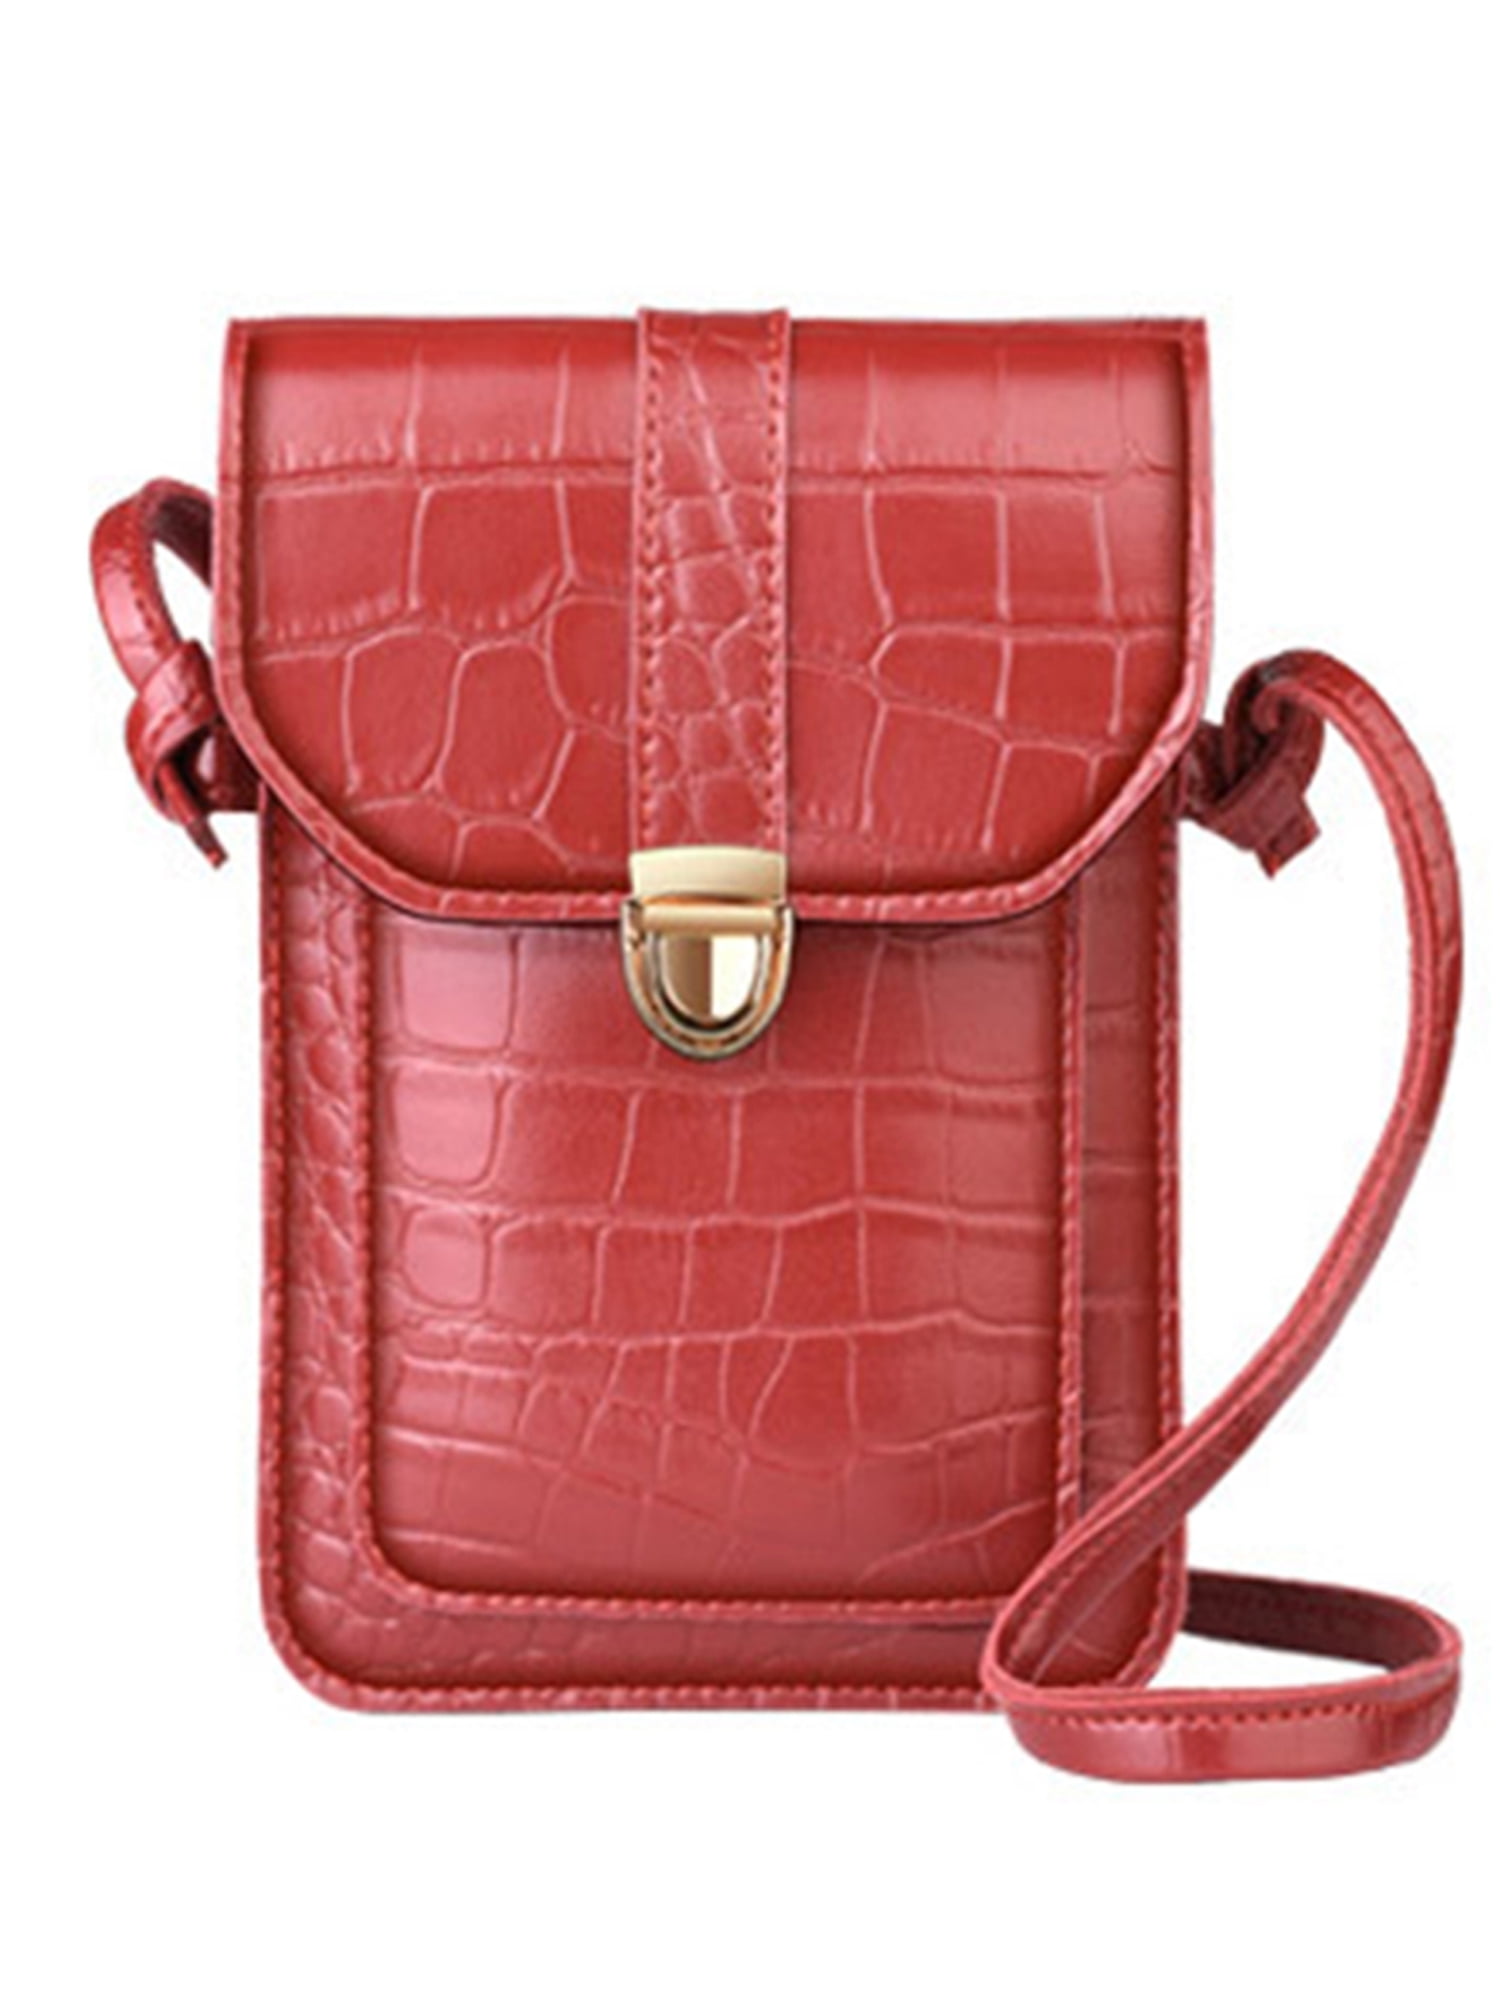 Niuer Ladies Fashion Shoulder Bag Crossbody Bags Women Lock Pouch Cell Phone Purse Flap Shopping Travel Multi Pocket Handbag Pocket Red - Walmart.com